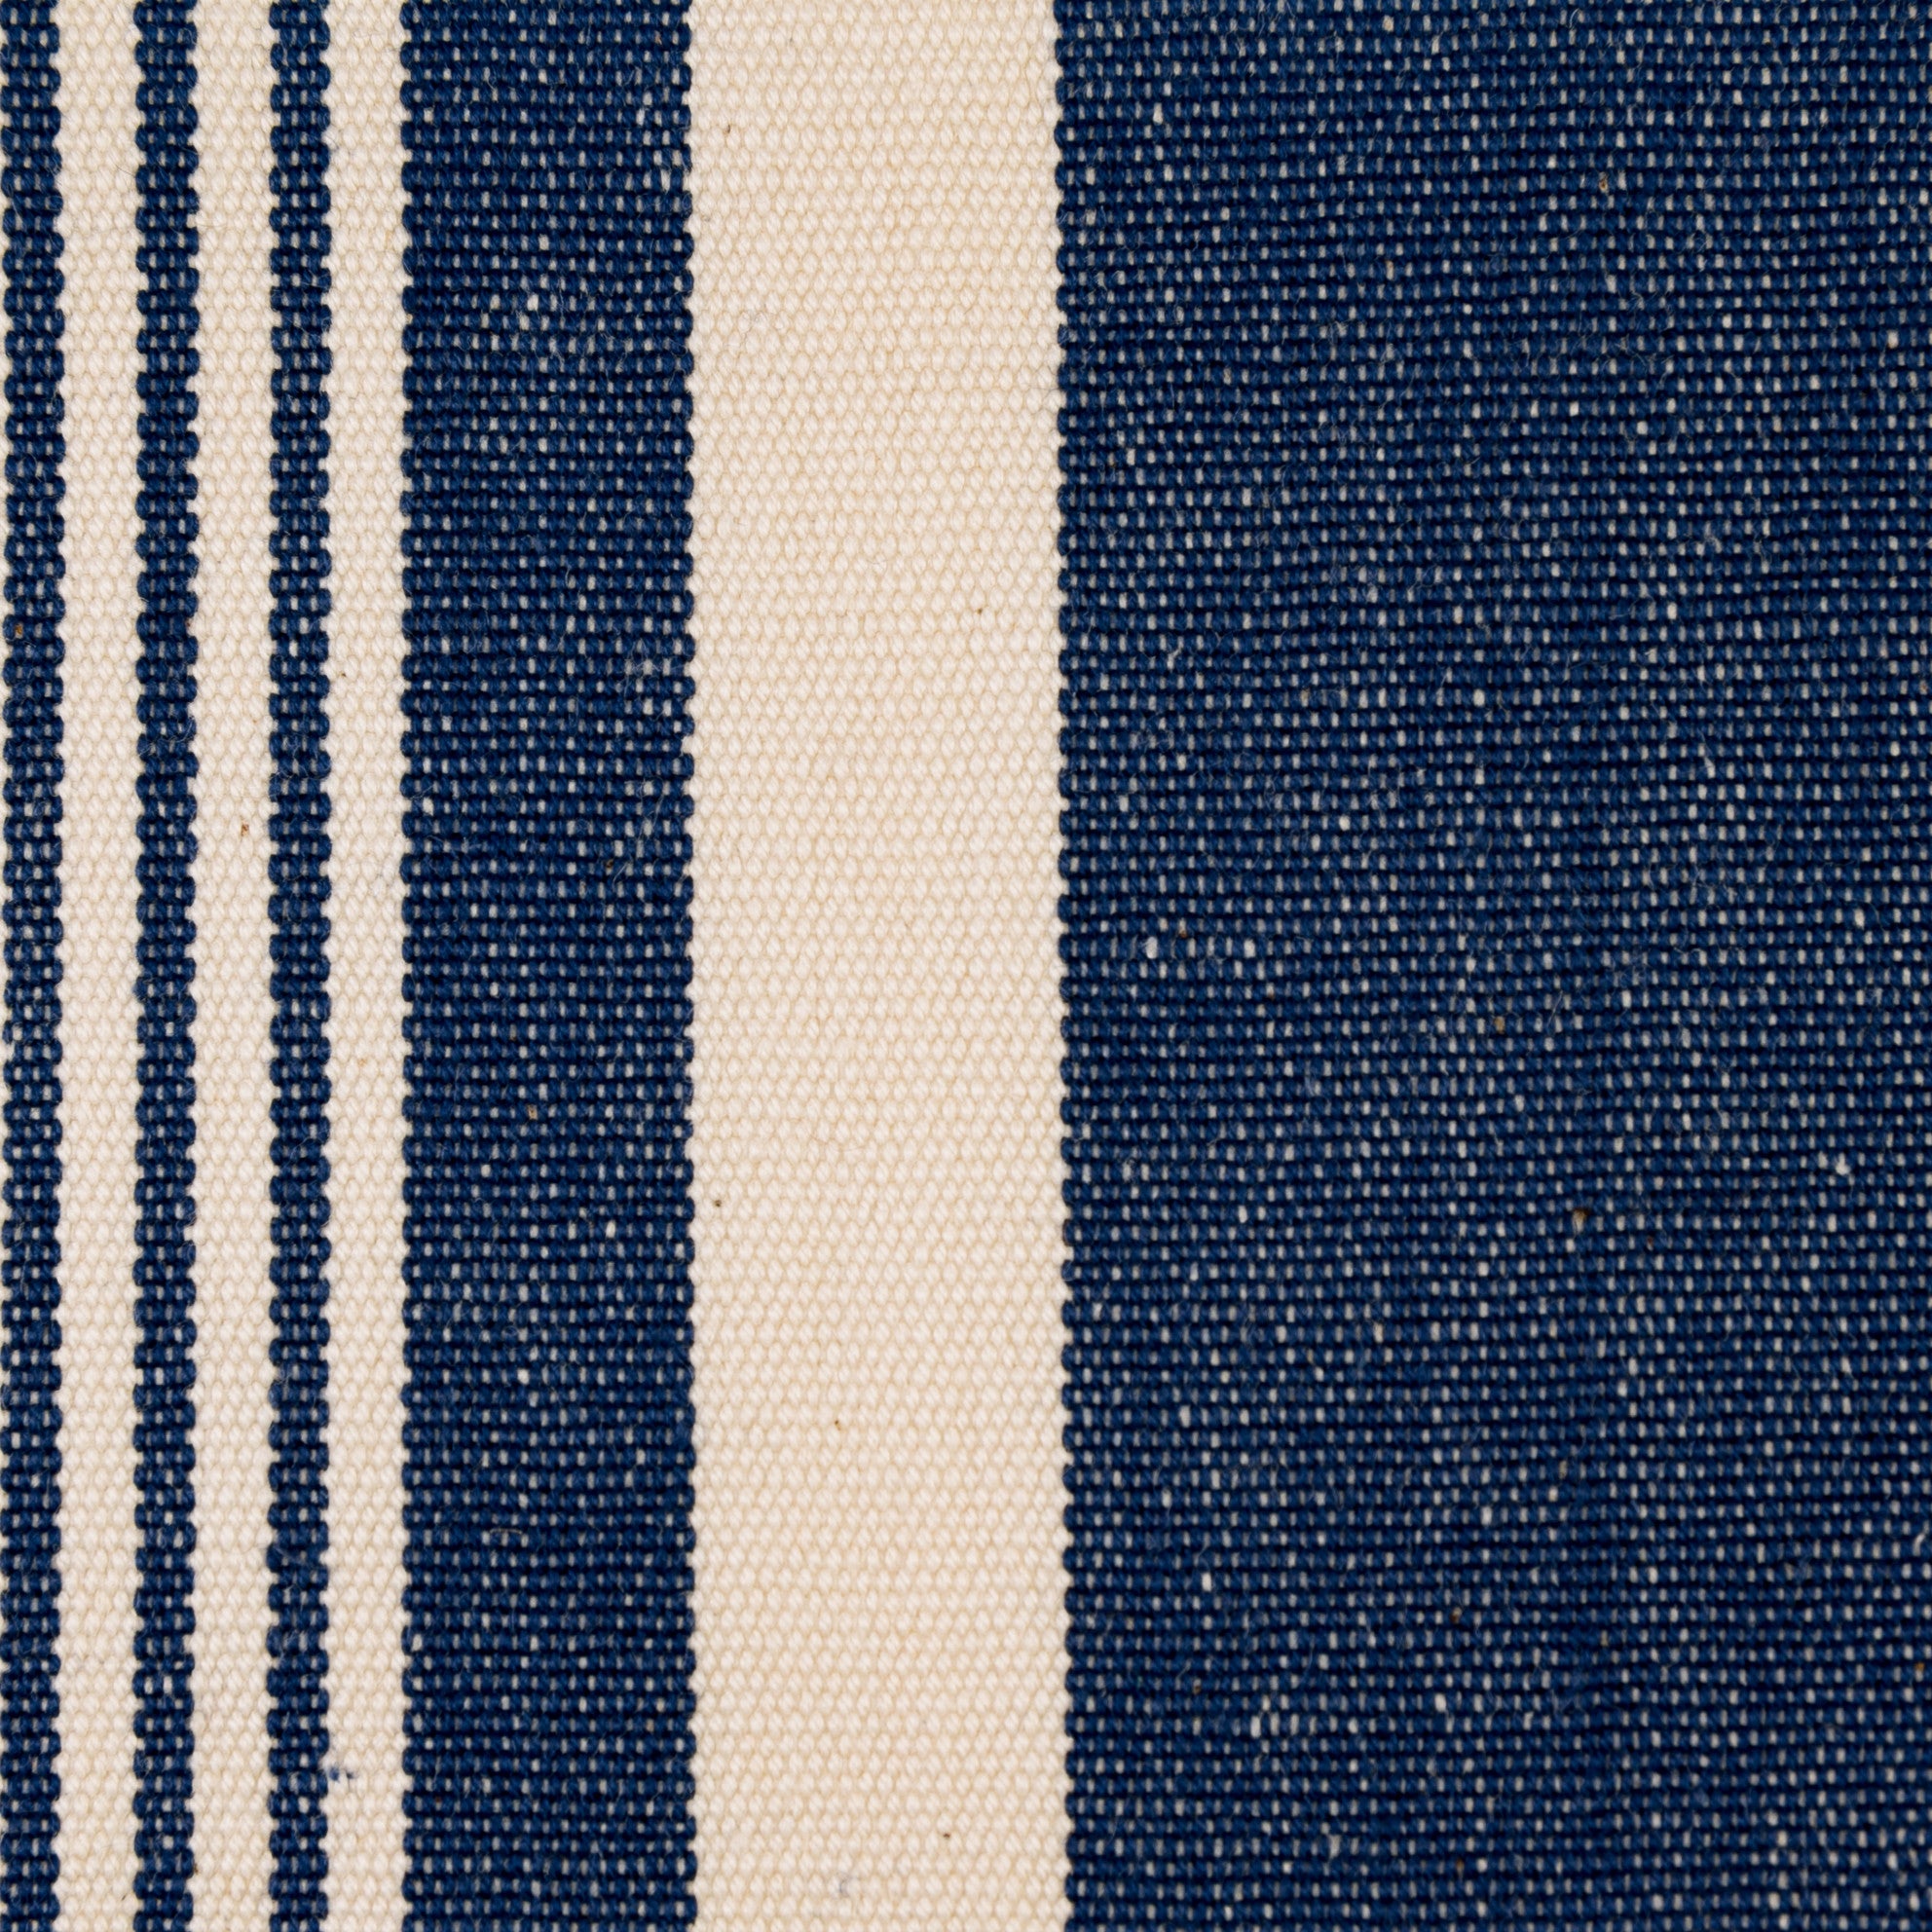 Woven Striped Fabric - Crantock 05/031 Mood Indigo | Nicholas Engert Interiors